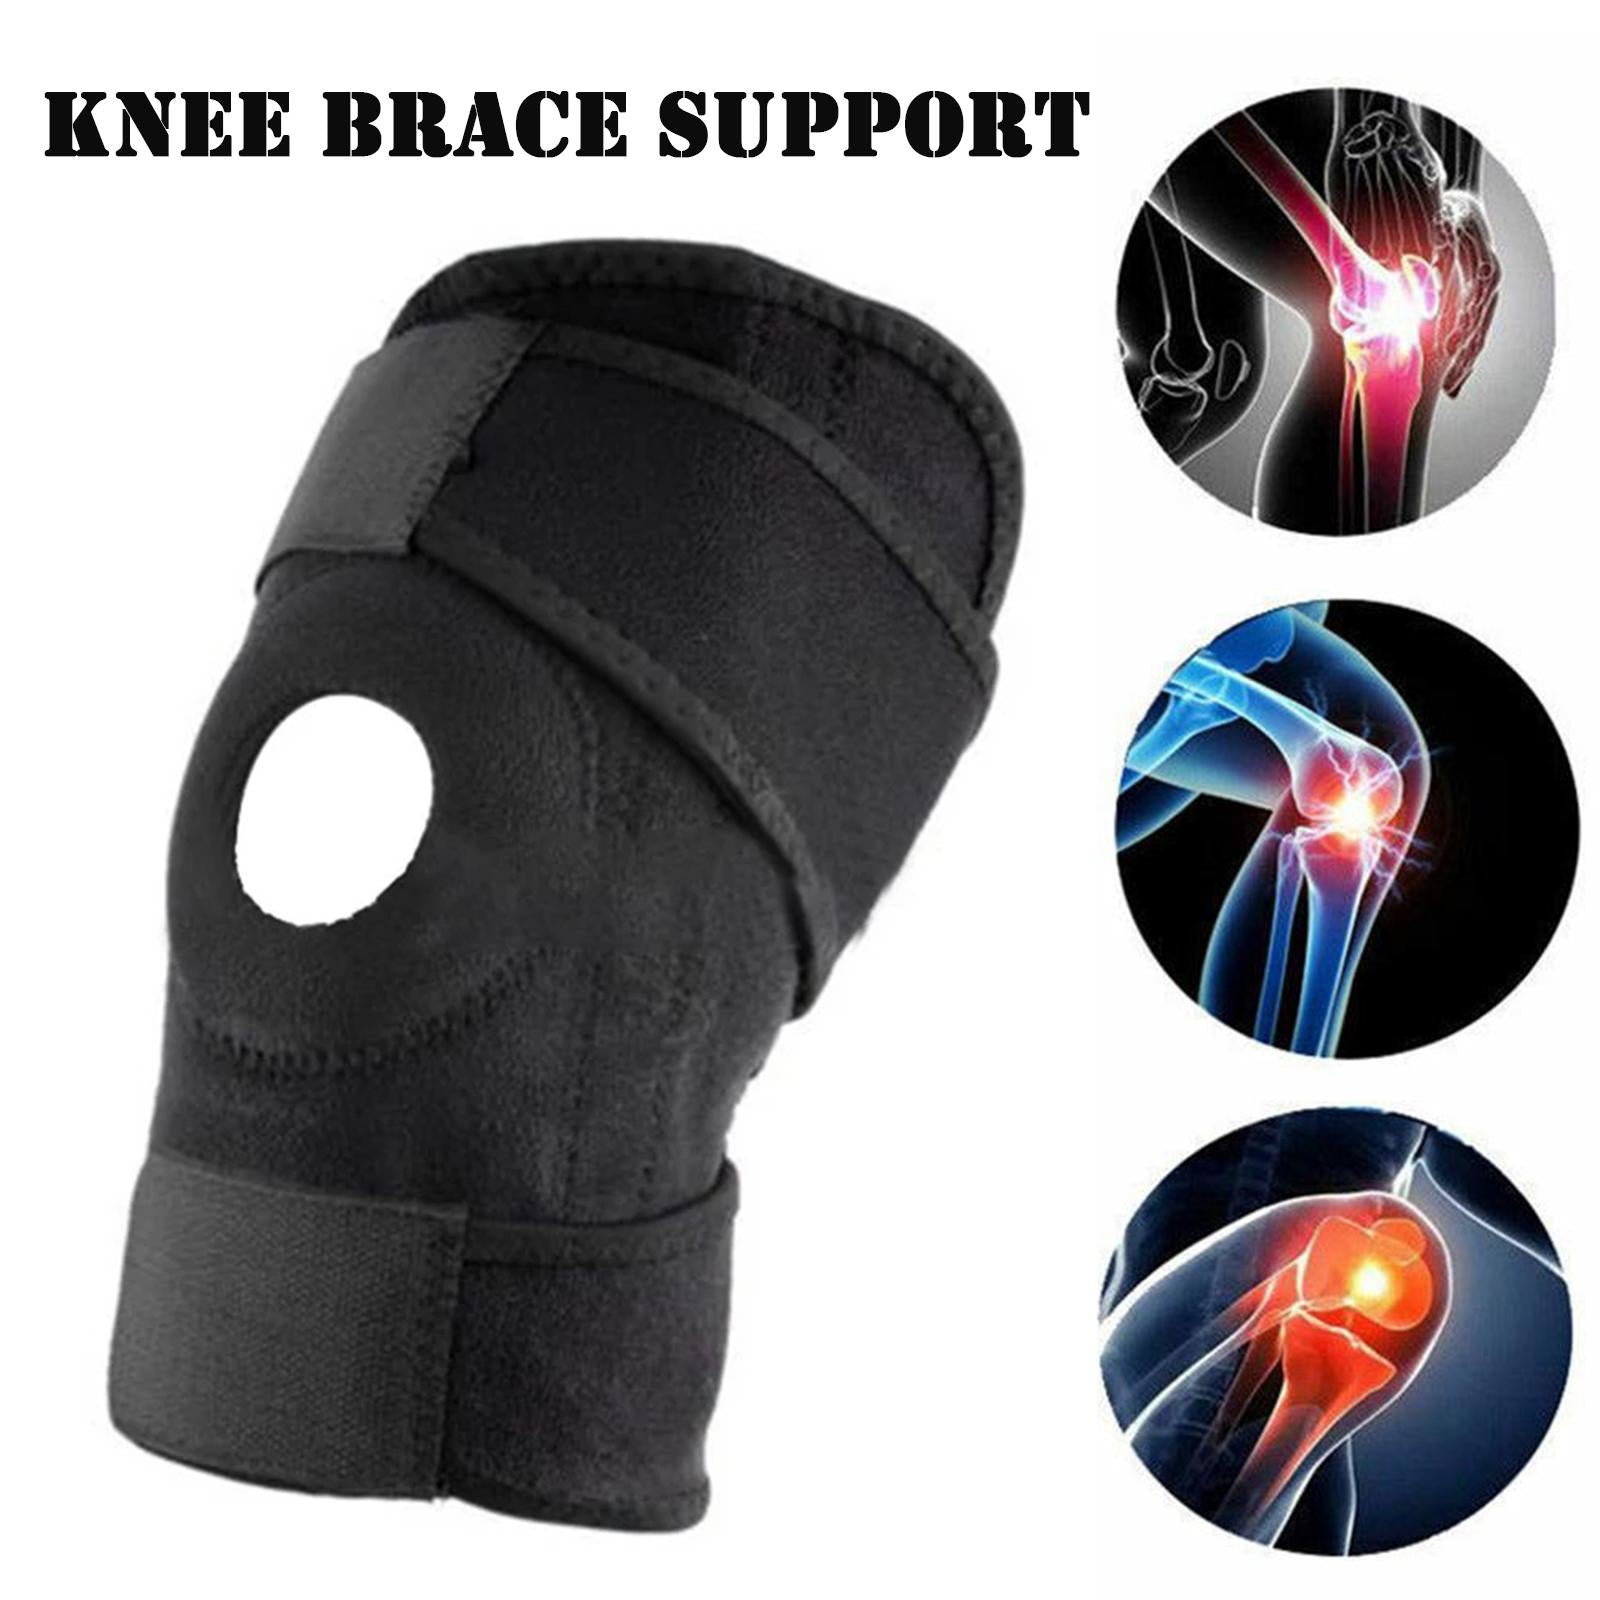 Fitness Knee Support - Knee Brace